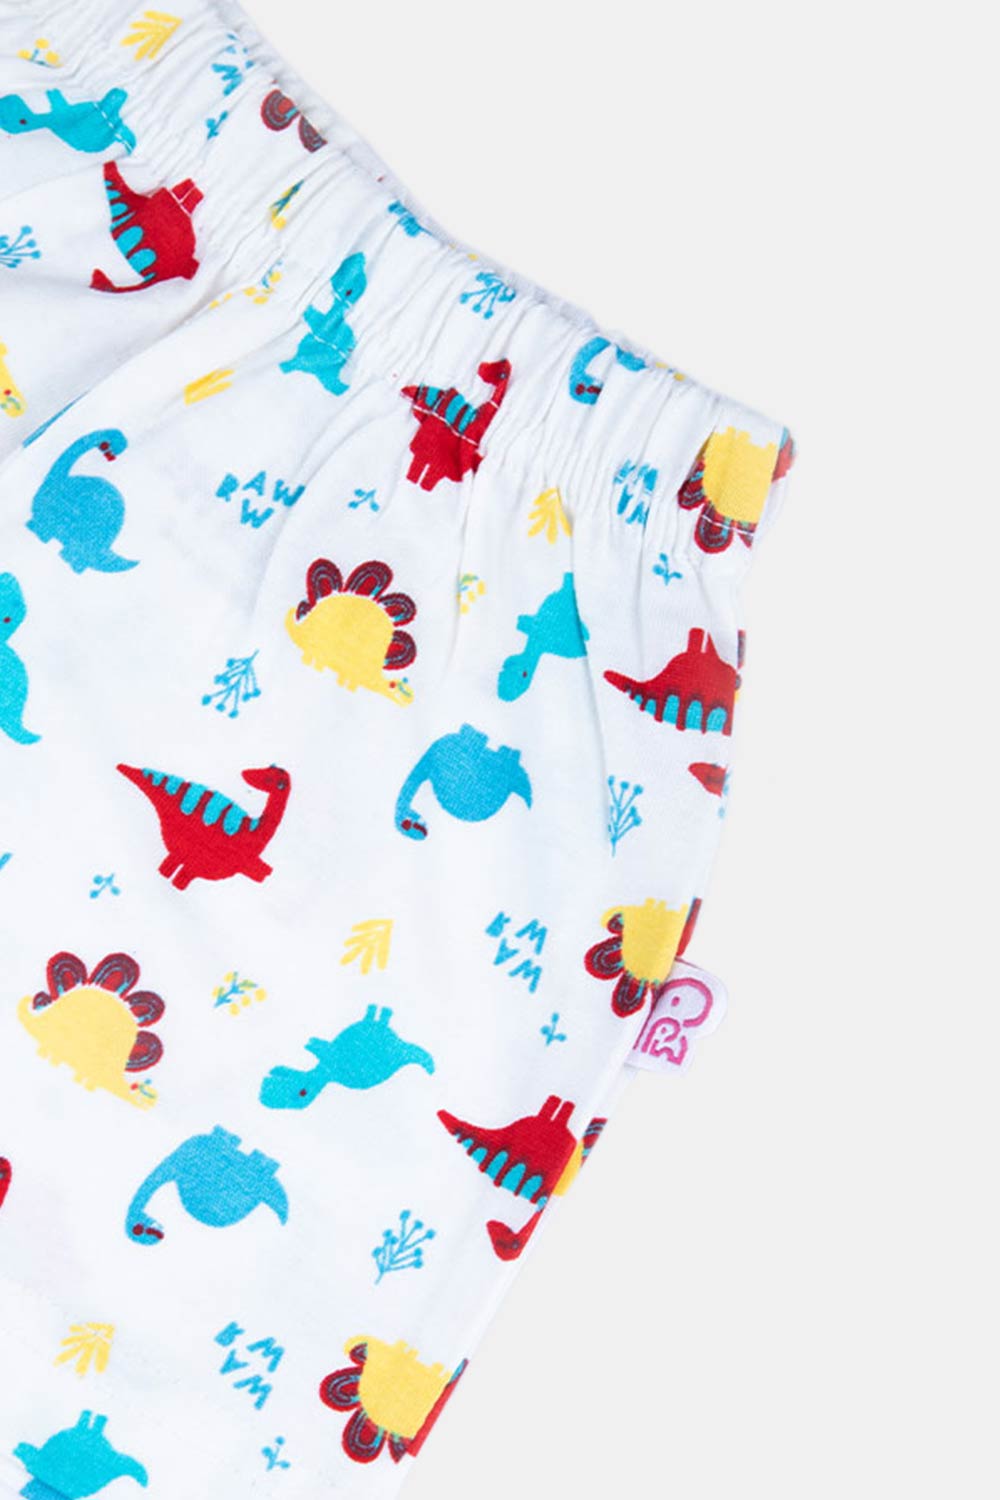 Oh Baby Dino Print - Shorts SH01 Size   0m-3m Color Aqua